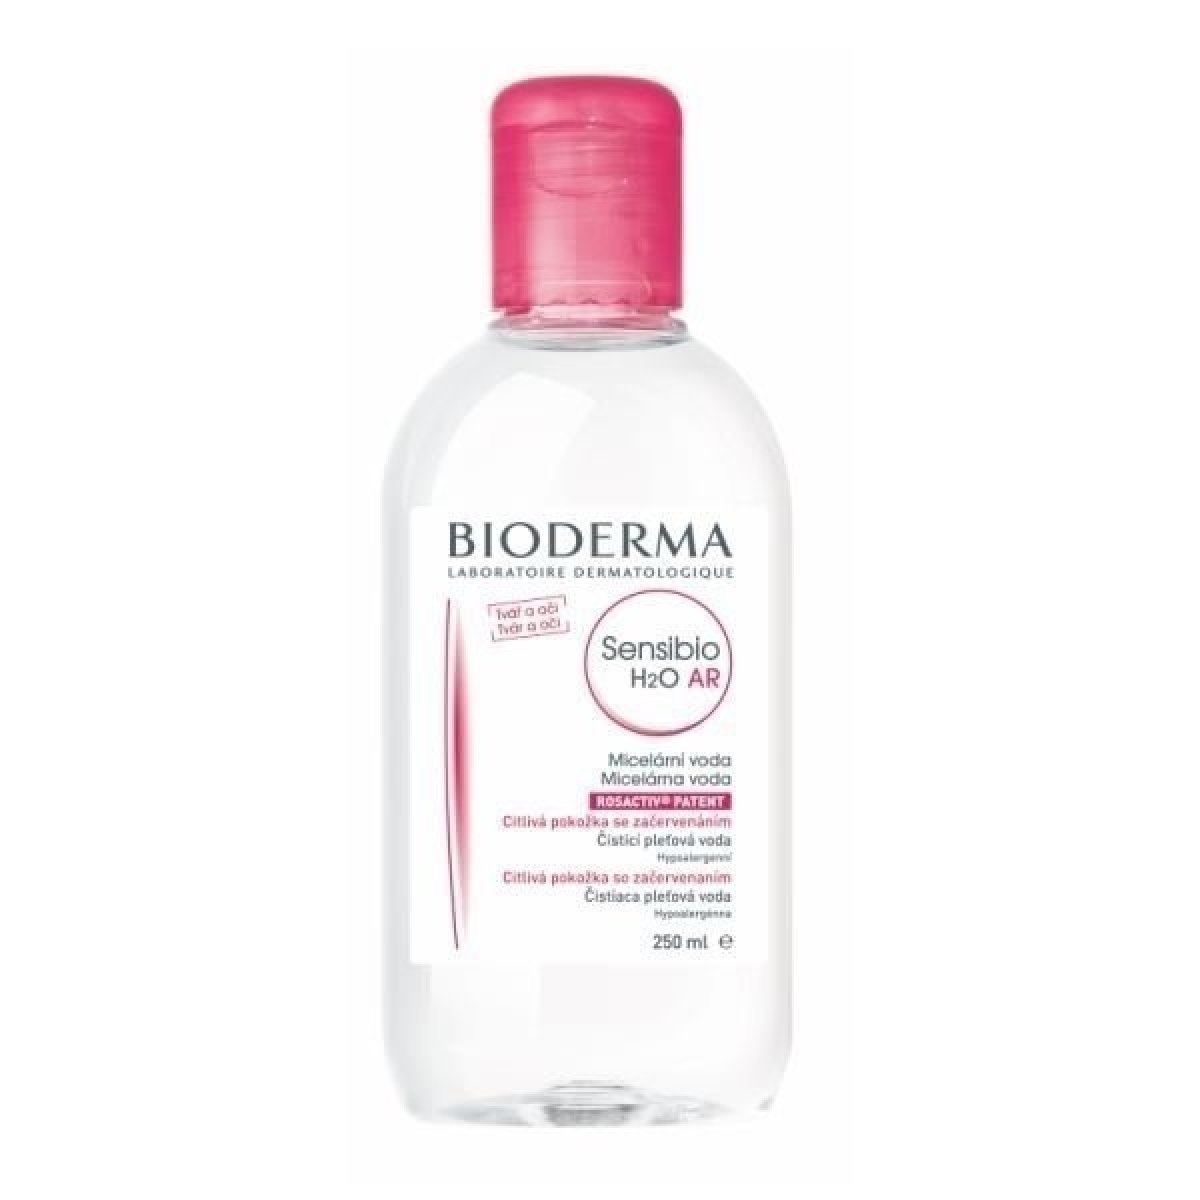 Bioderma Sensibio H2O AR micelární voda 250 ml od 188 Kč - Heureka.cz